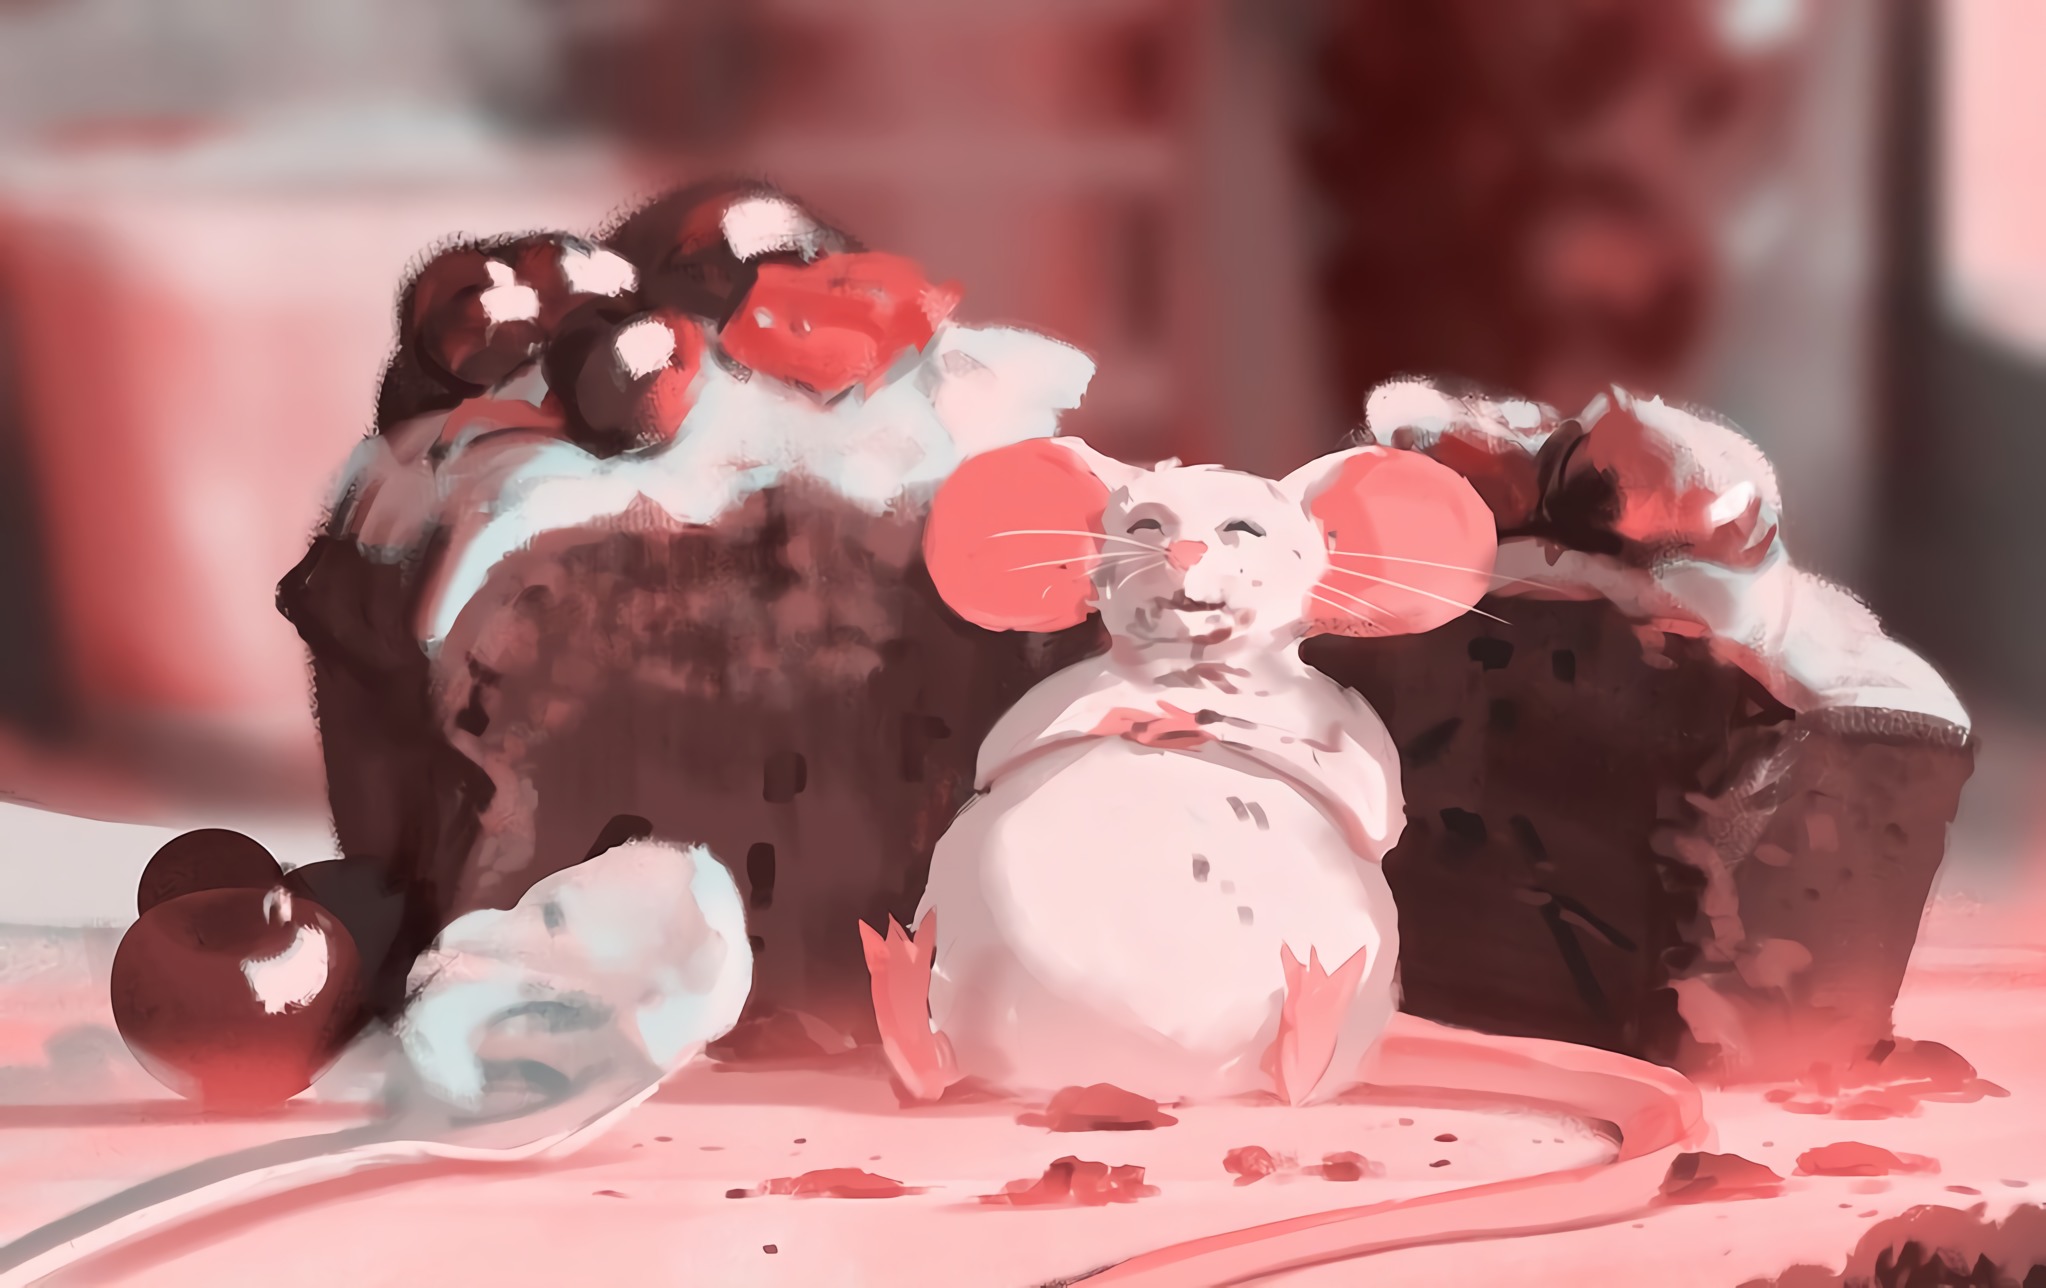 Digital Art Artwork Mice Mouse Ears Stuffed Animal Animals Cake Food Atey Ghailan Cherries 2046x1288